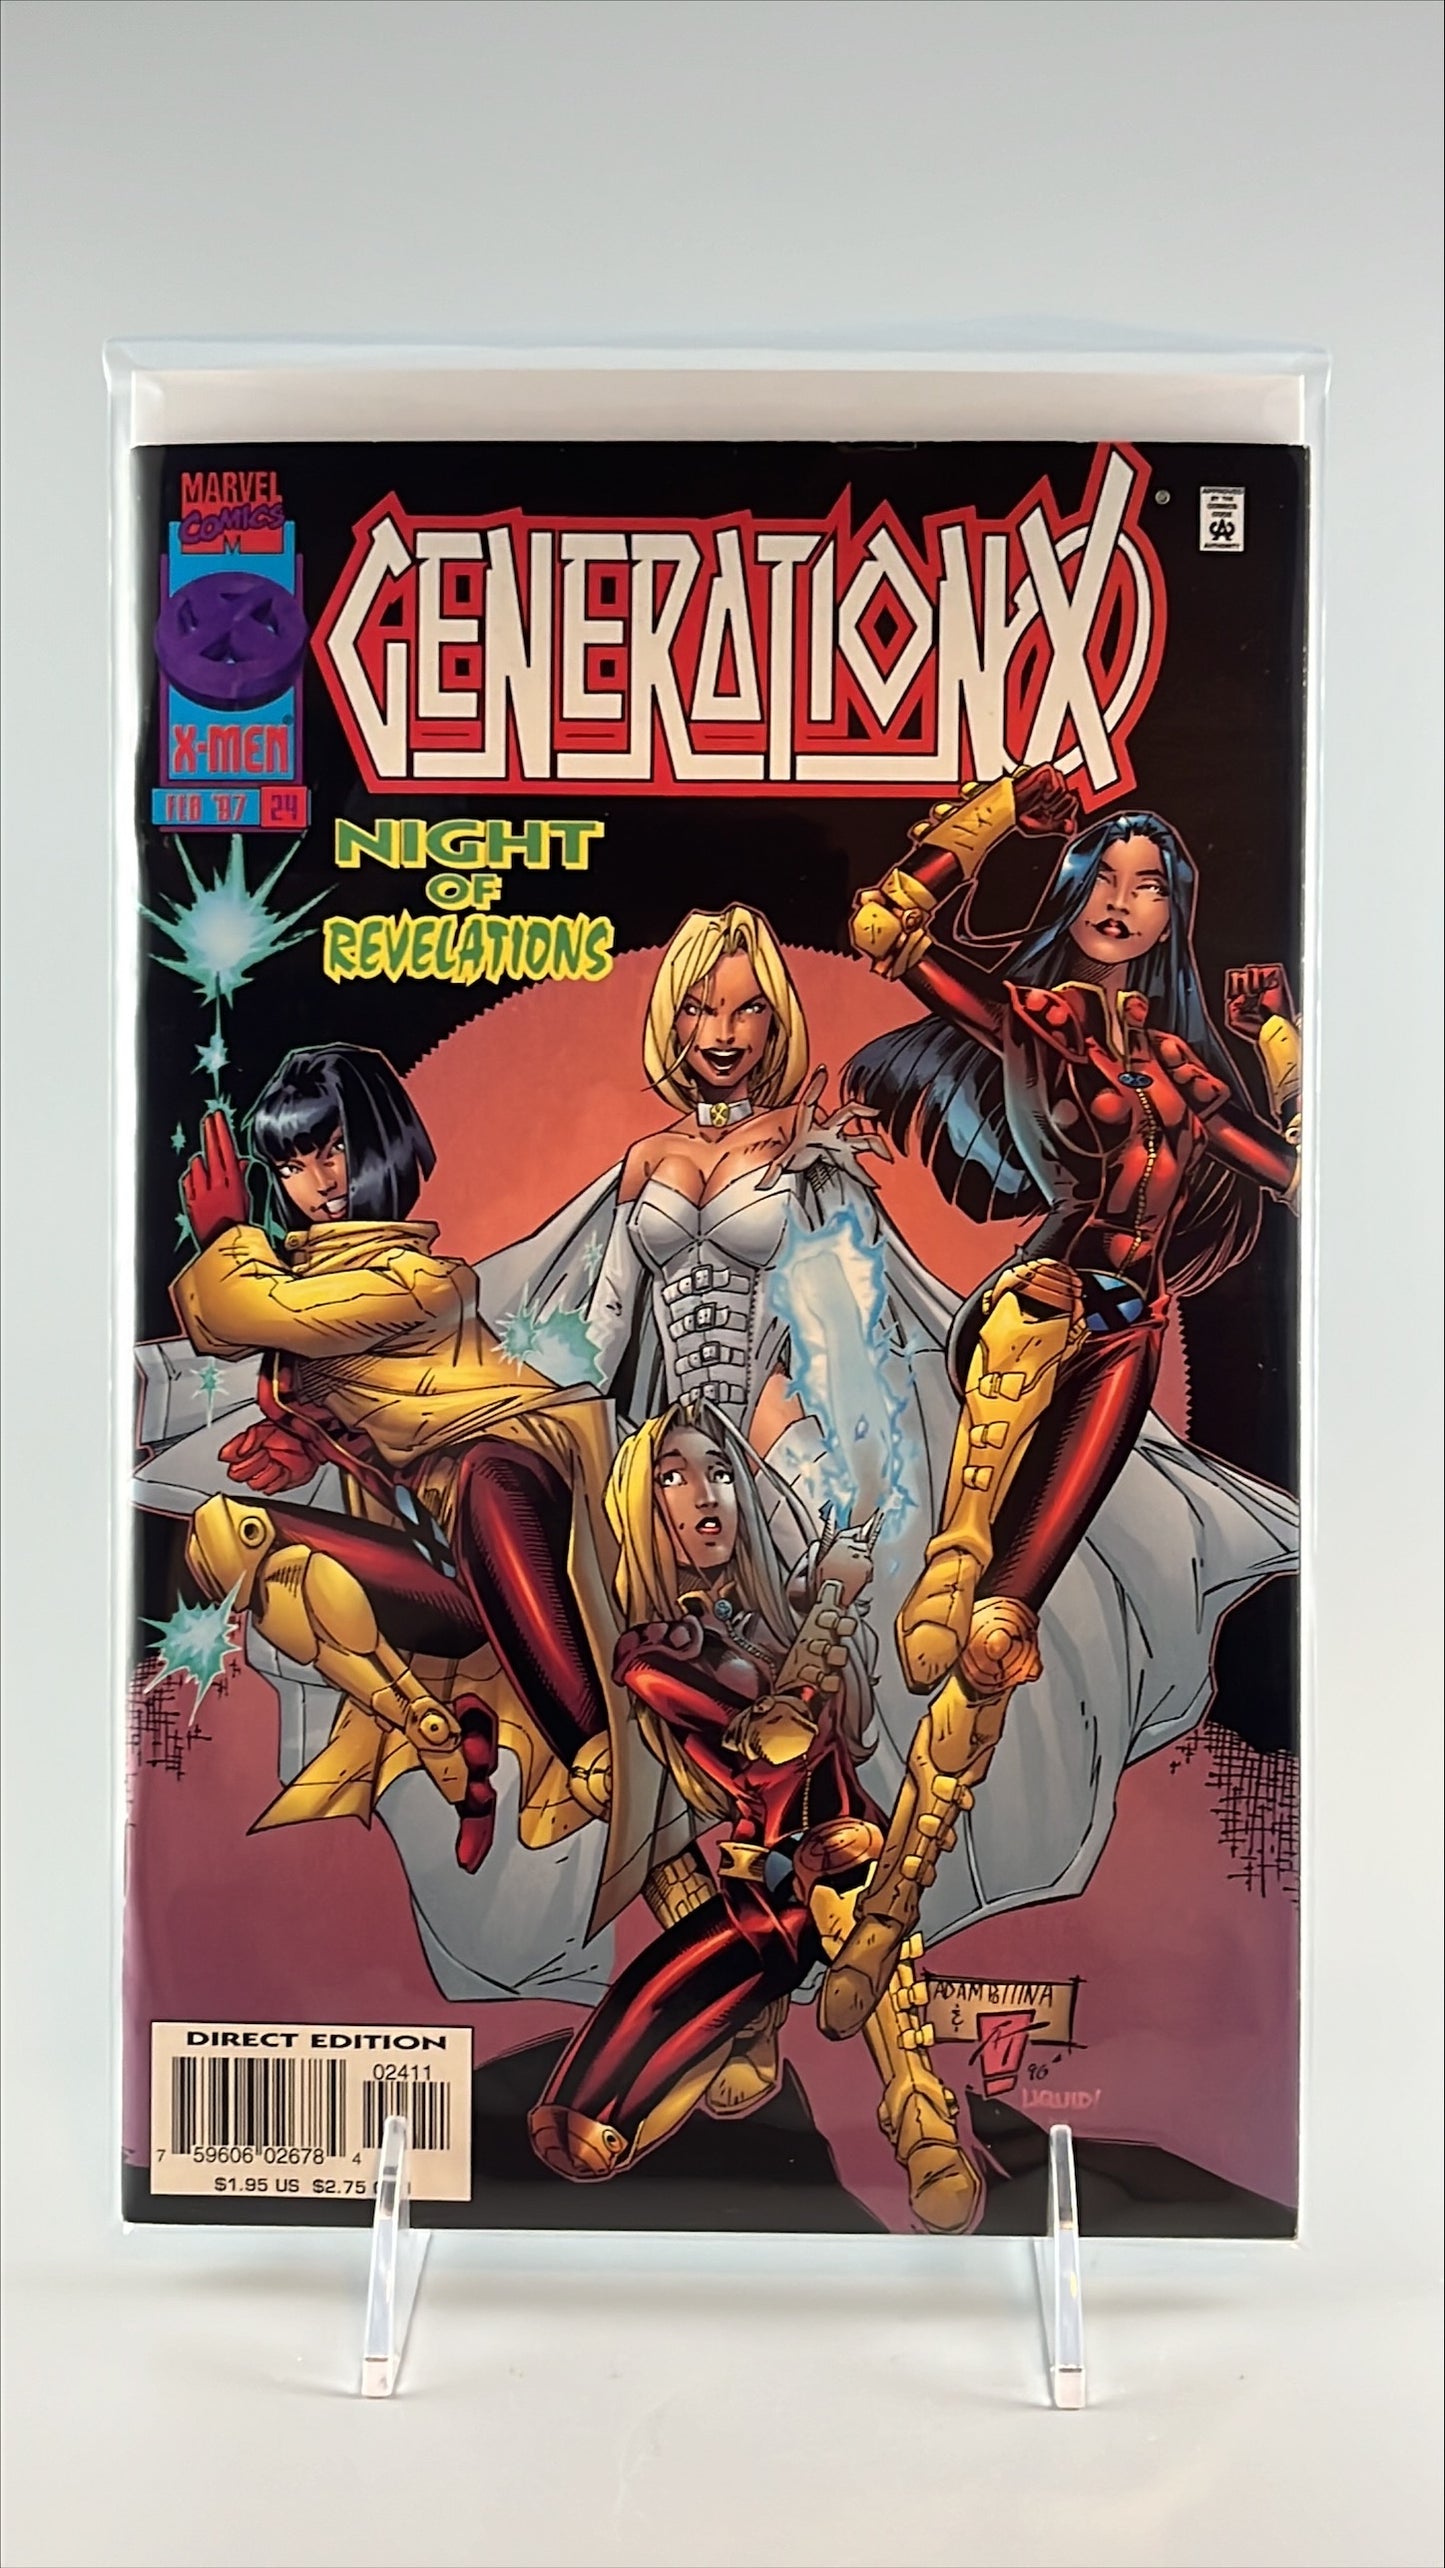 Generation X #24